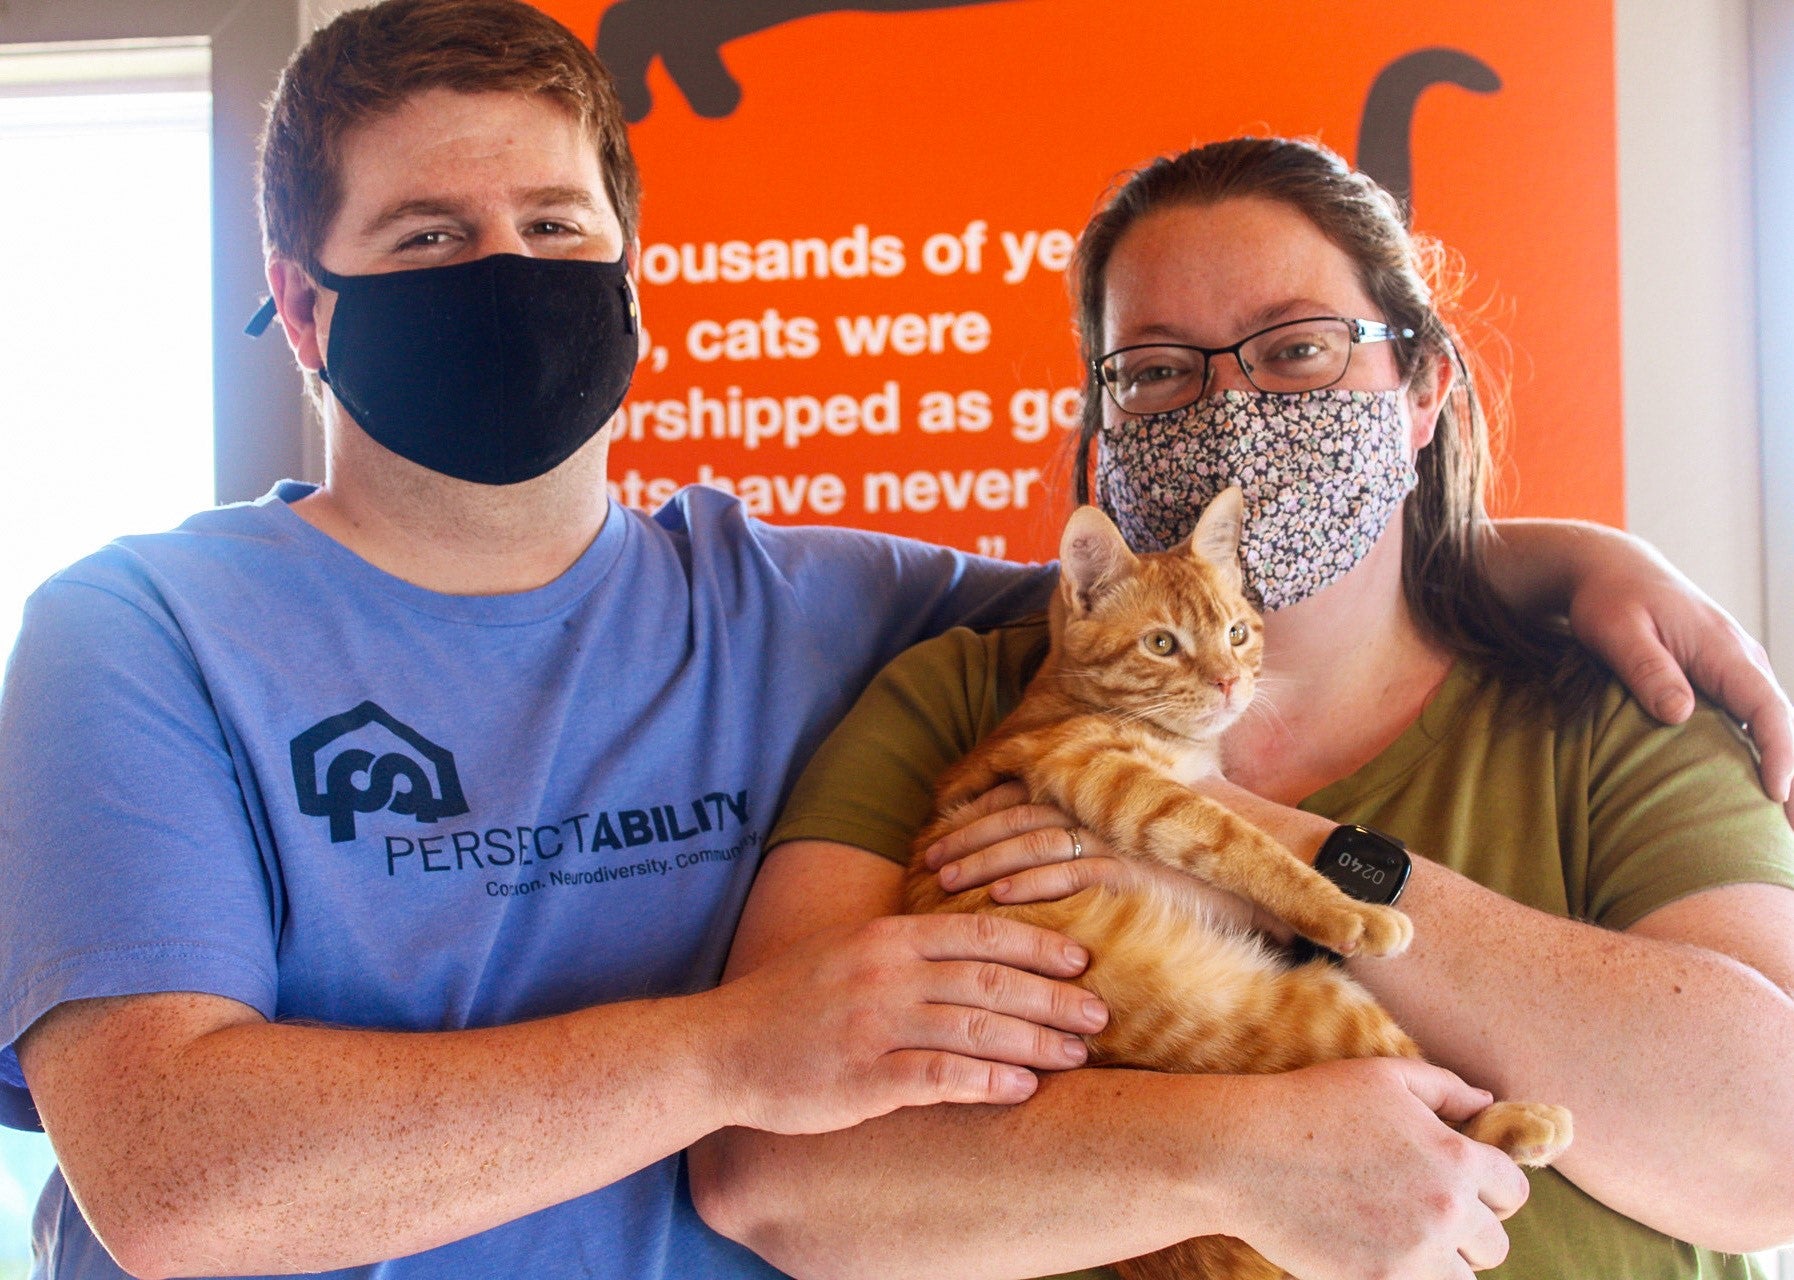 Two people wearing masks holding orange cat